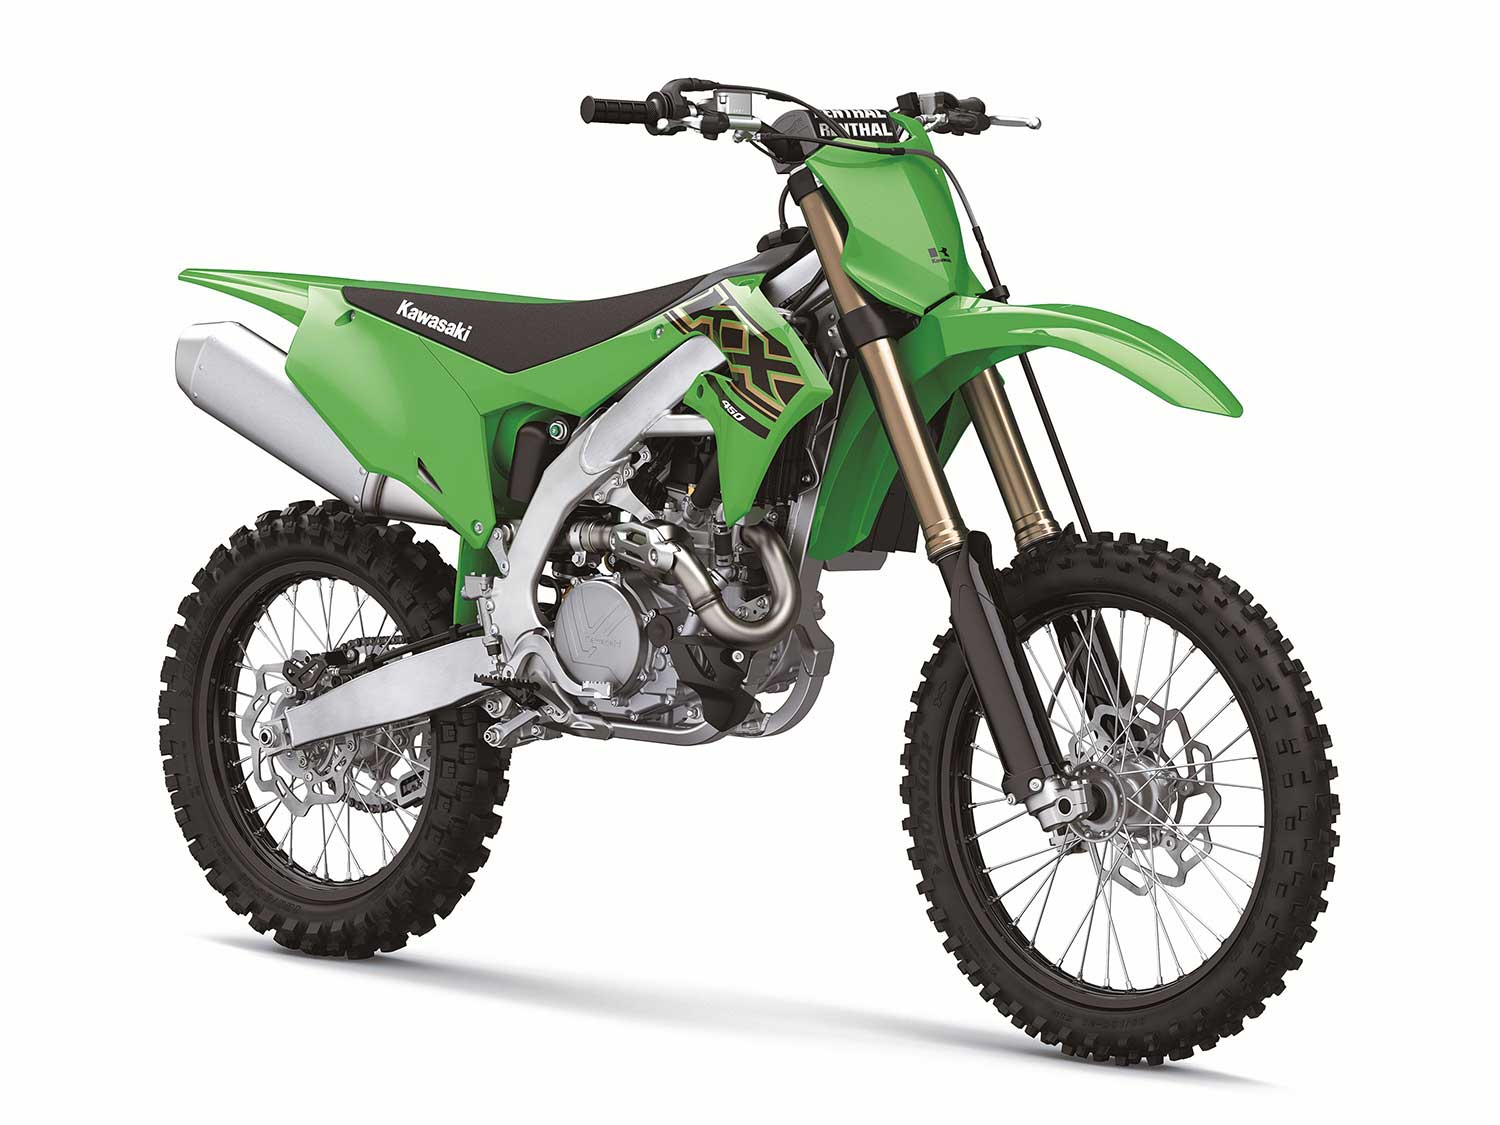 2021 Kawasaki Motocross And Models Released | Dirt Rider